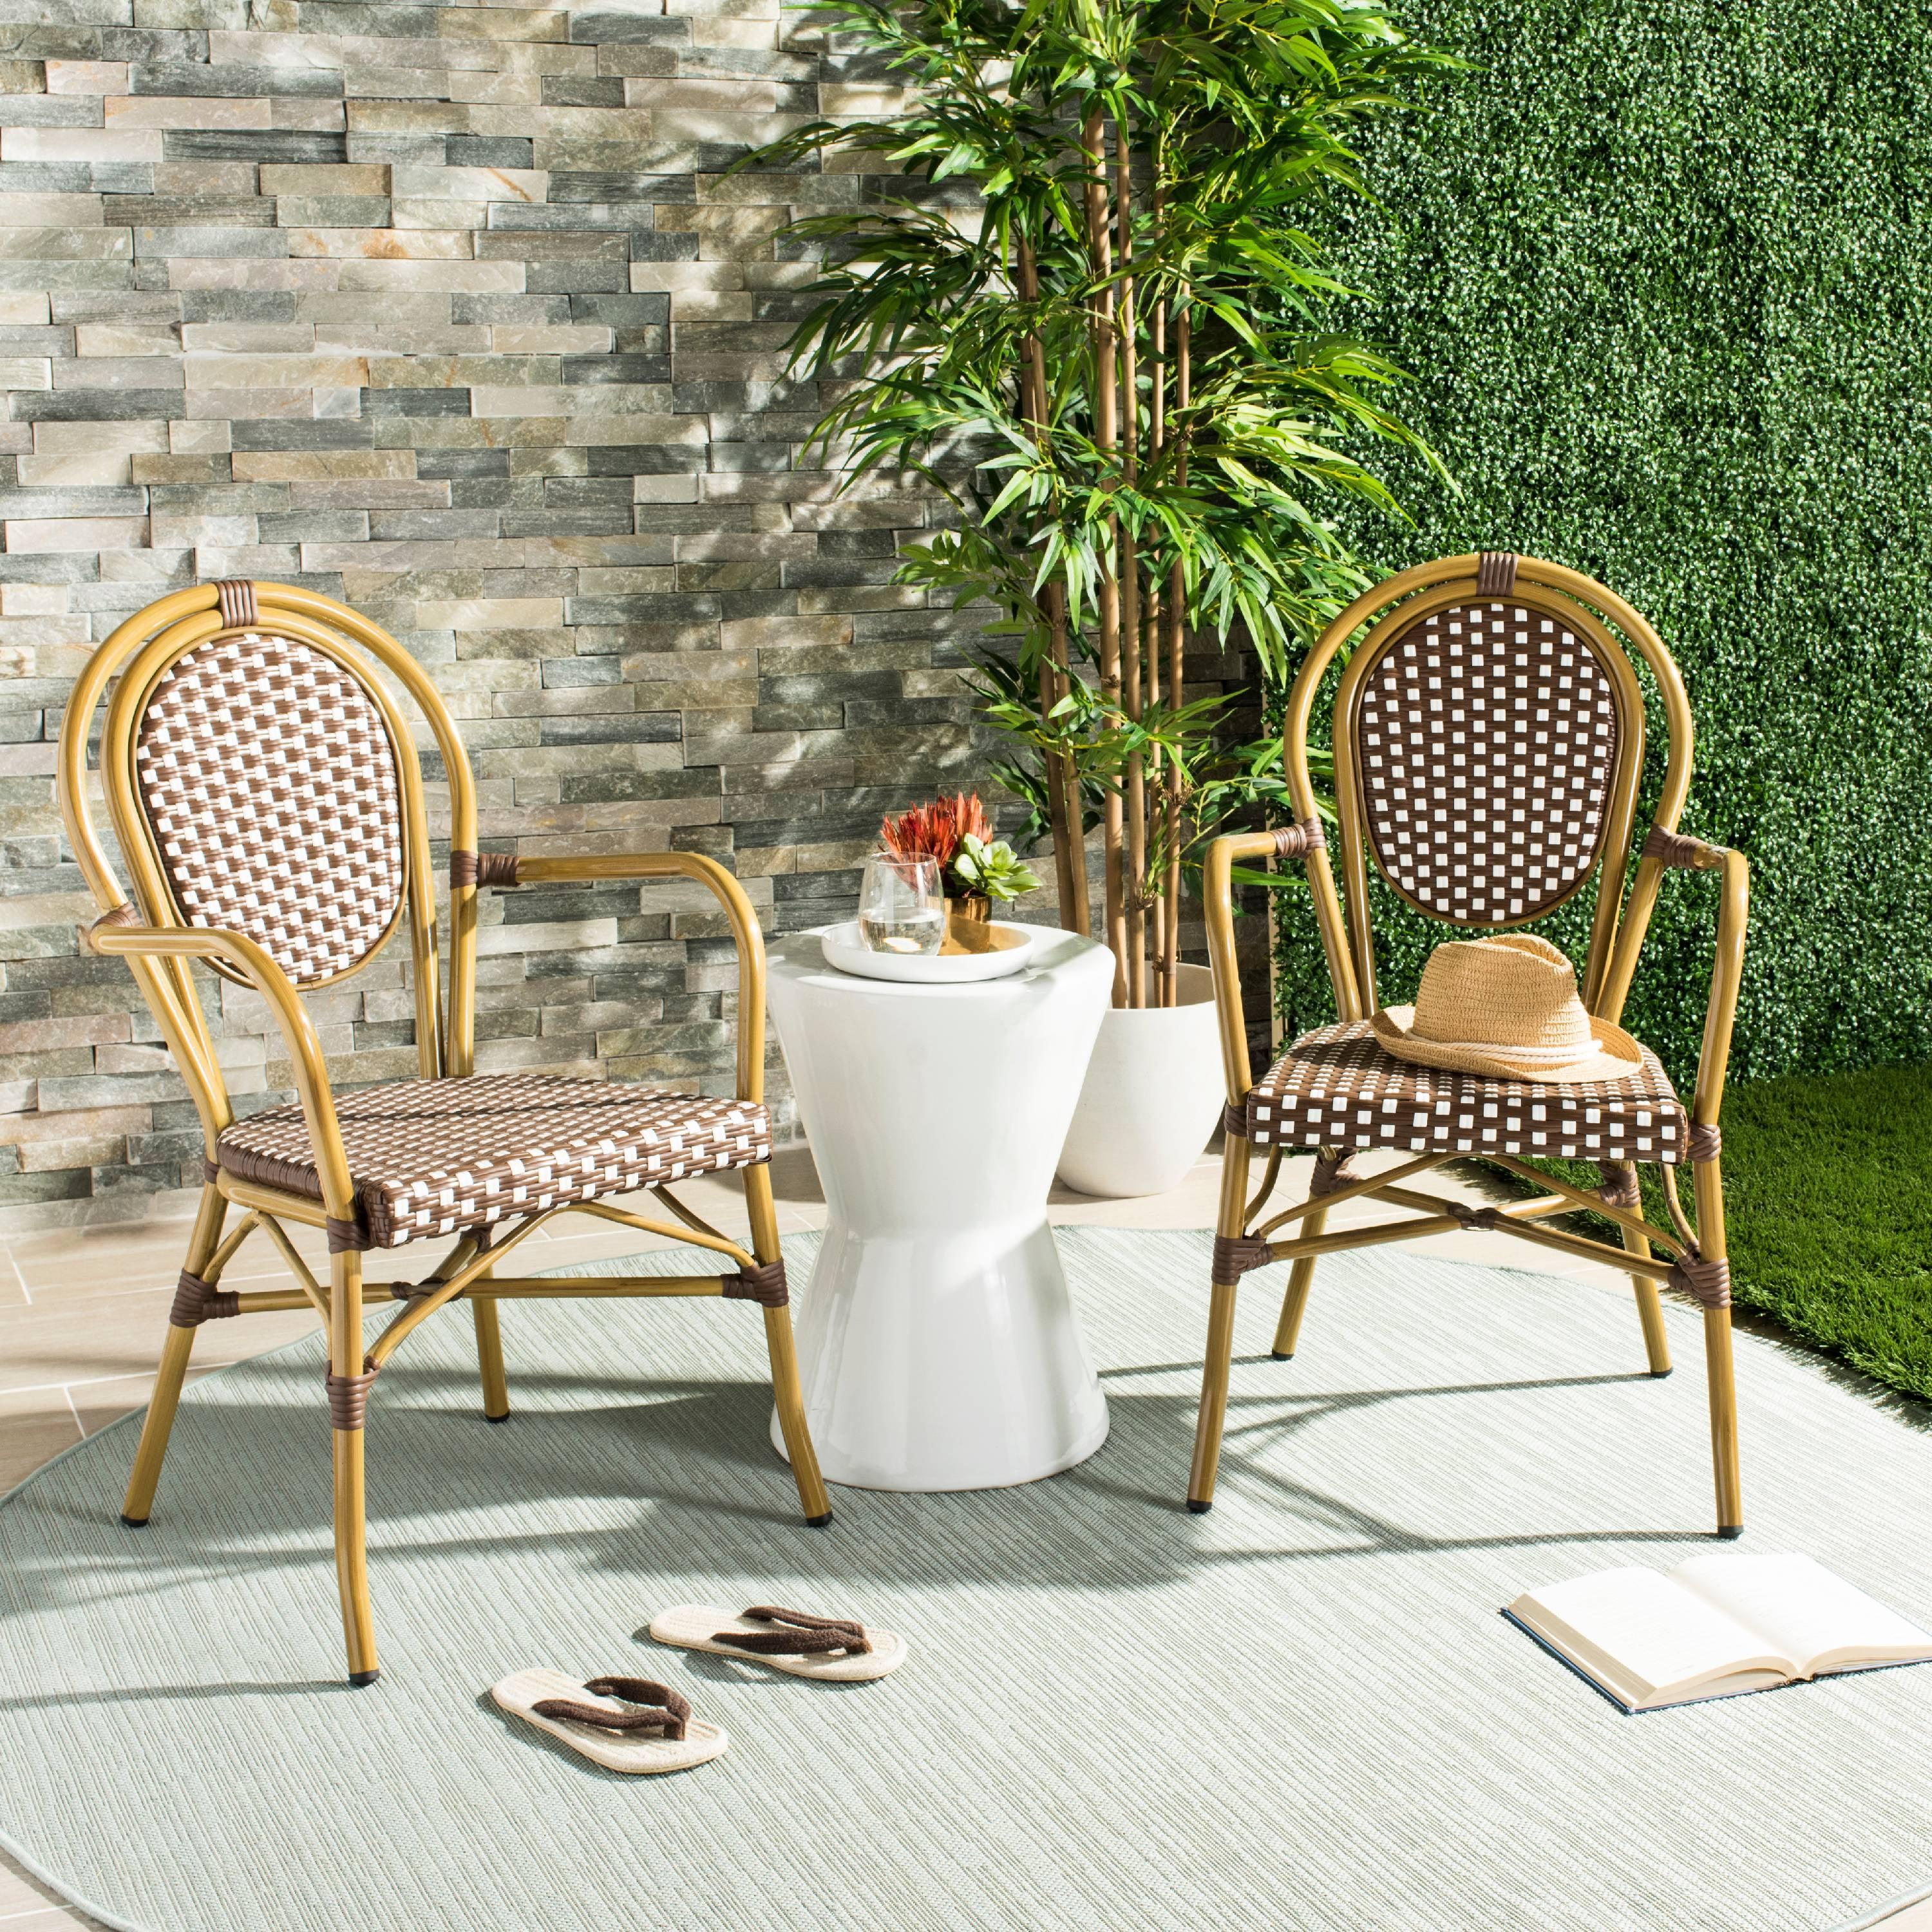 Côte d'Azur Inspired Brown & White Wicker Bistro Arm Chair